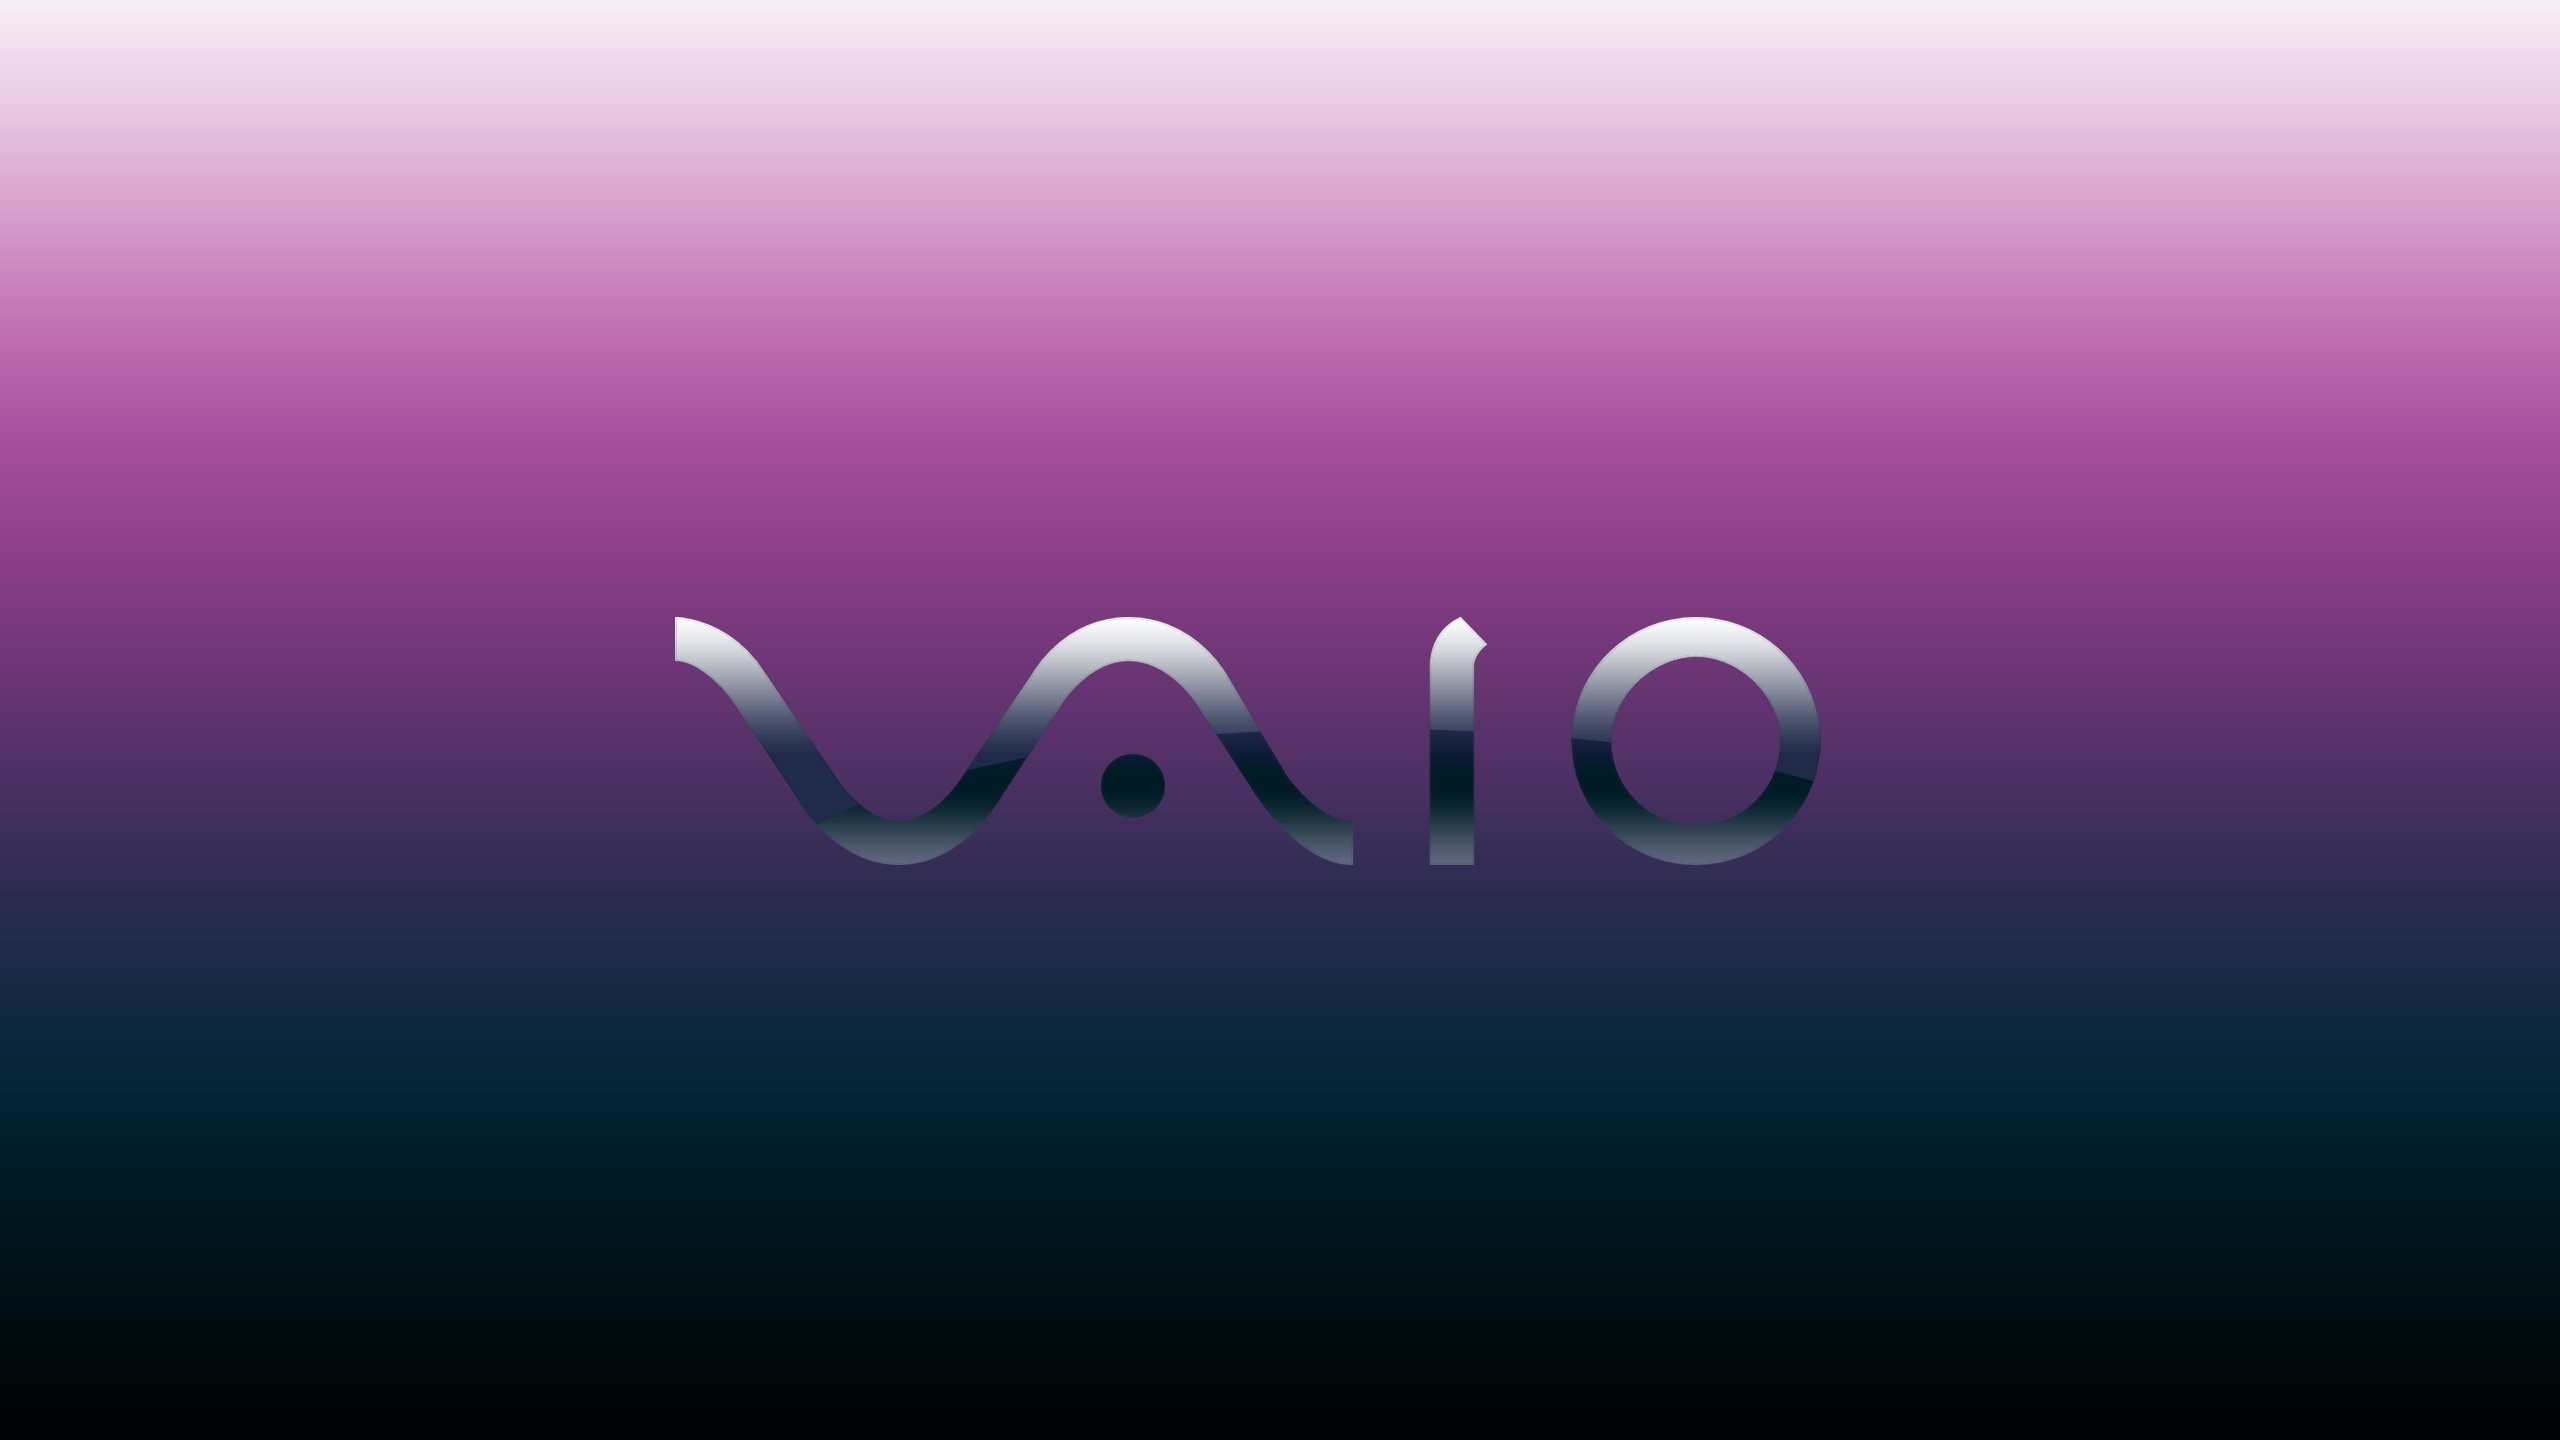 Sony Vaio Wallpaper 1080p (55+ images)